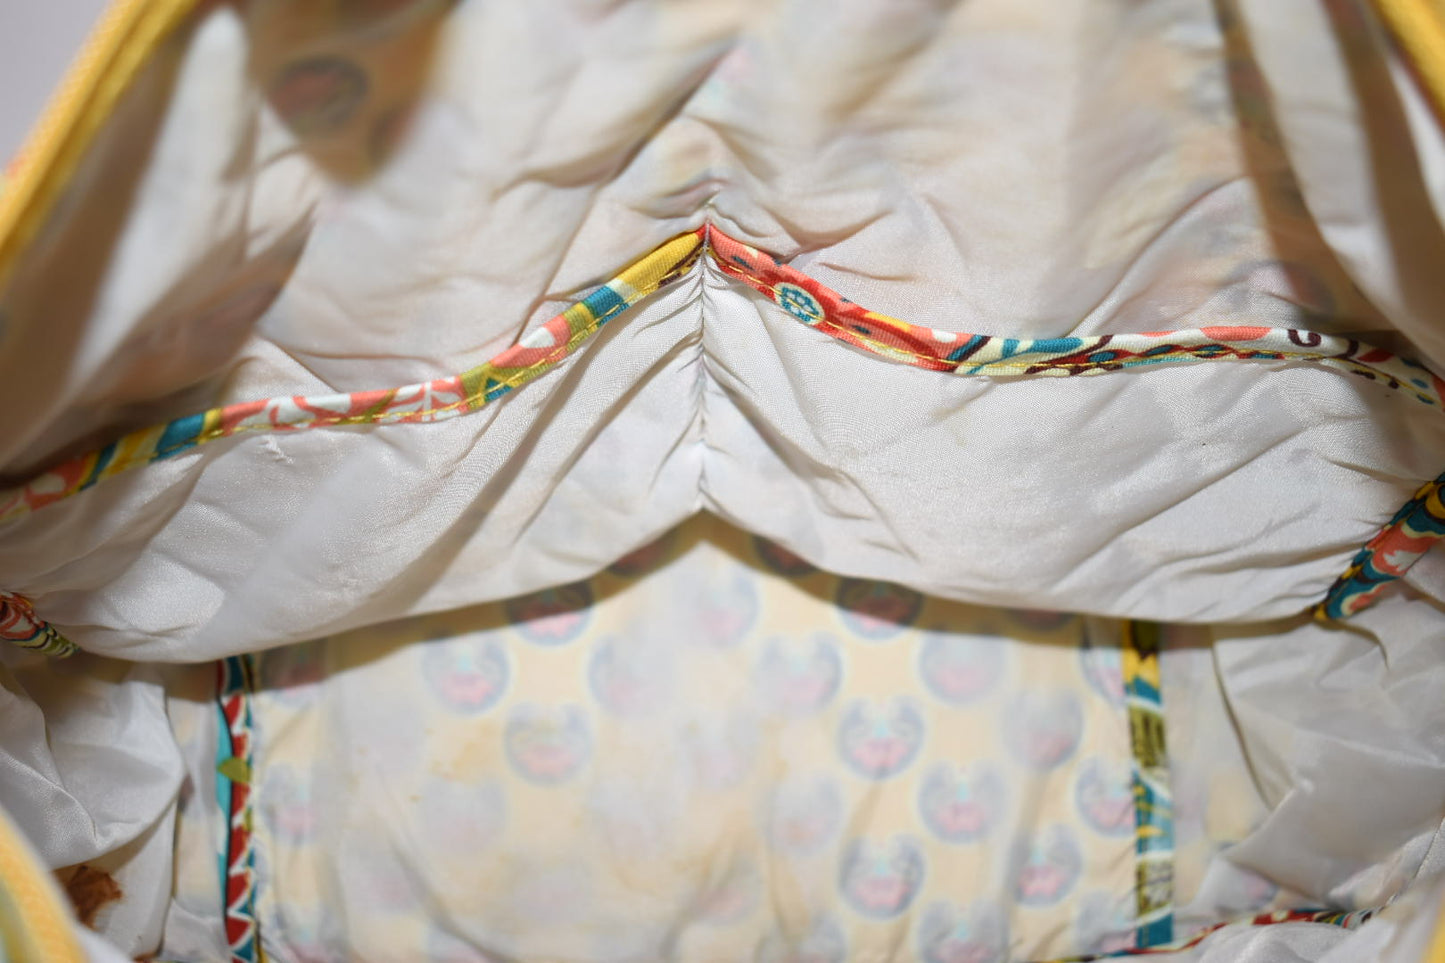 Vera Bradley Mom's Day Out Diaper Crossbody Bag in "Provencal" Pattern